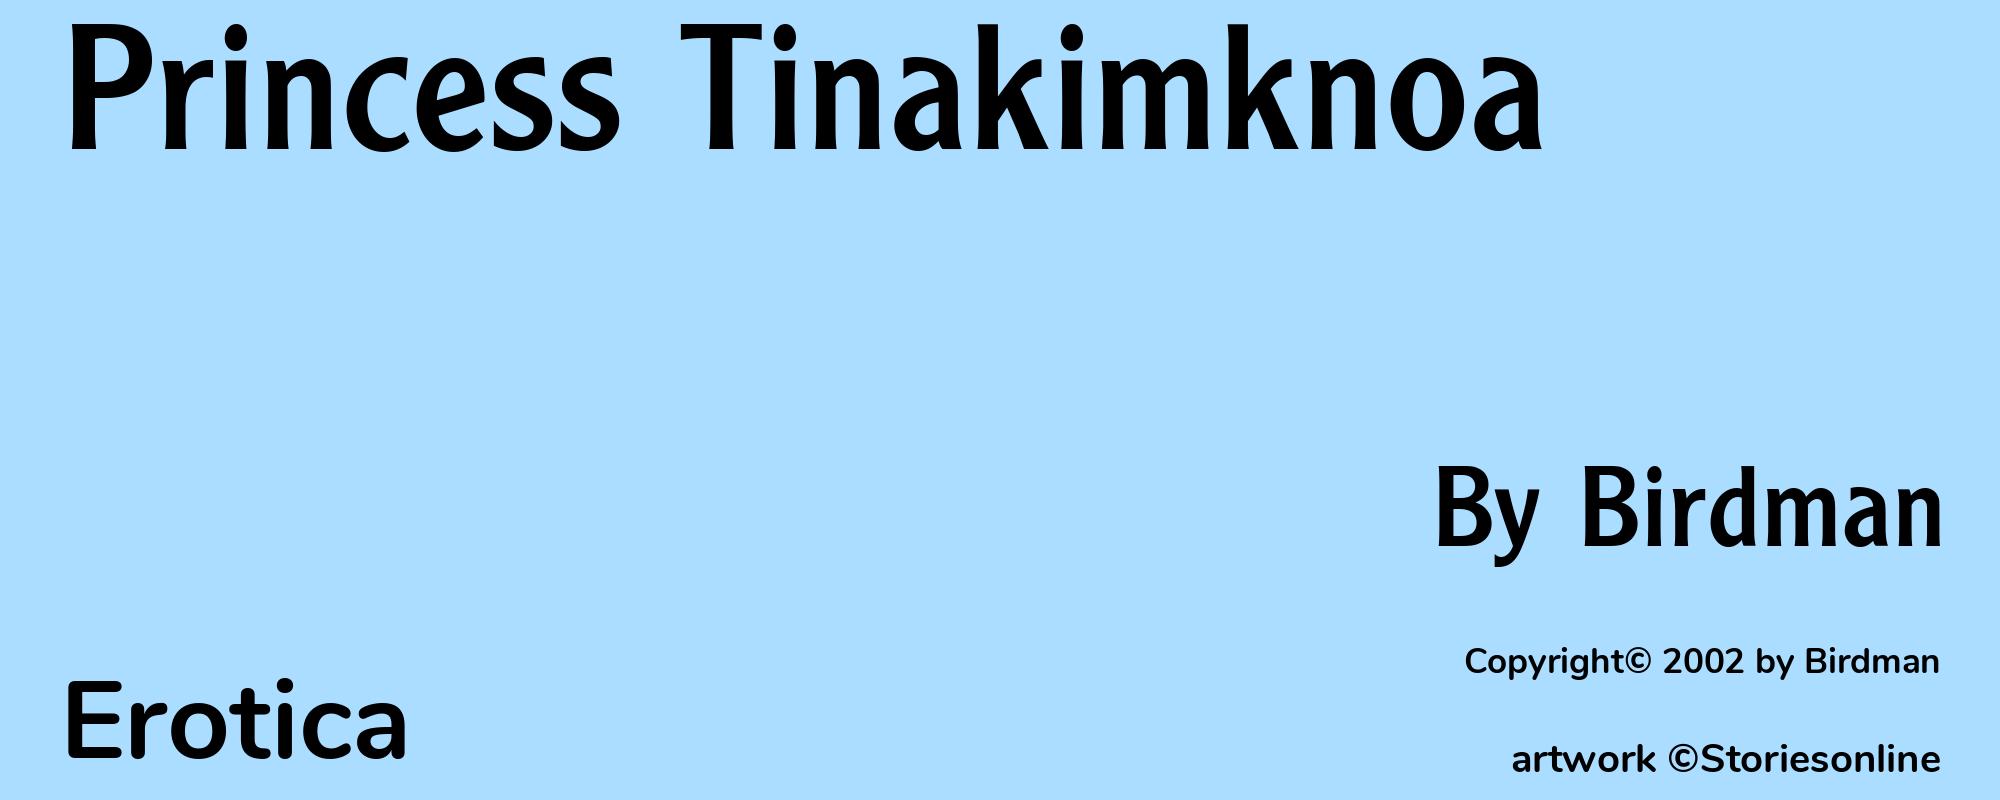 Princess Tinakimknoa - Cover